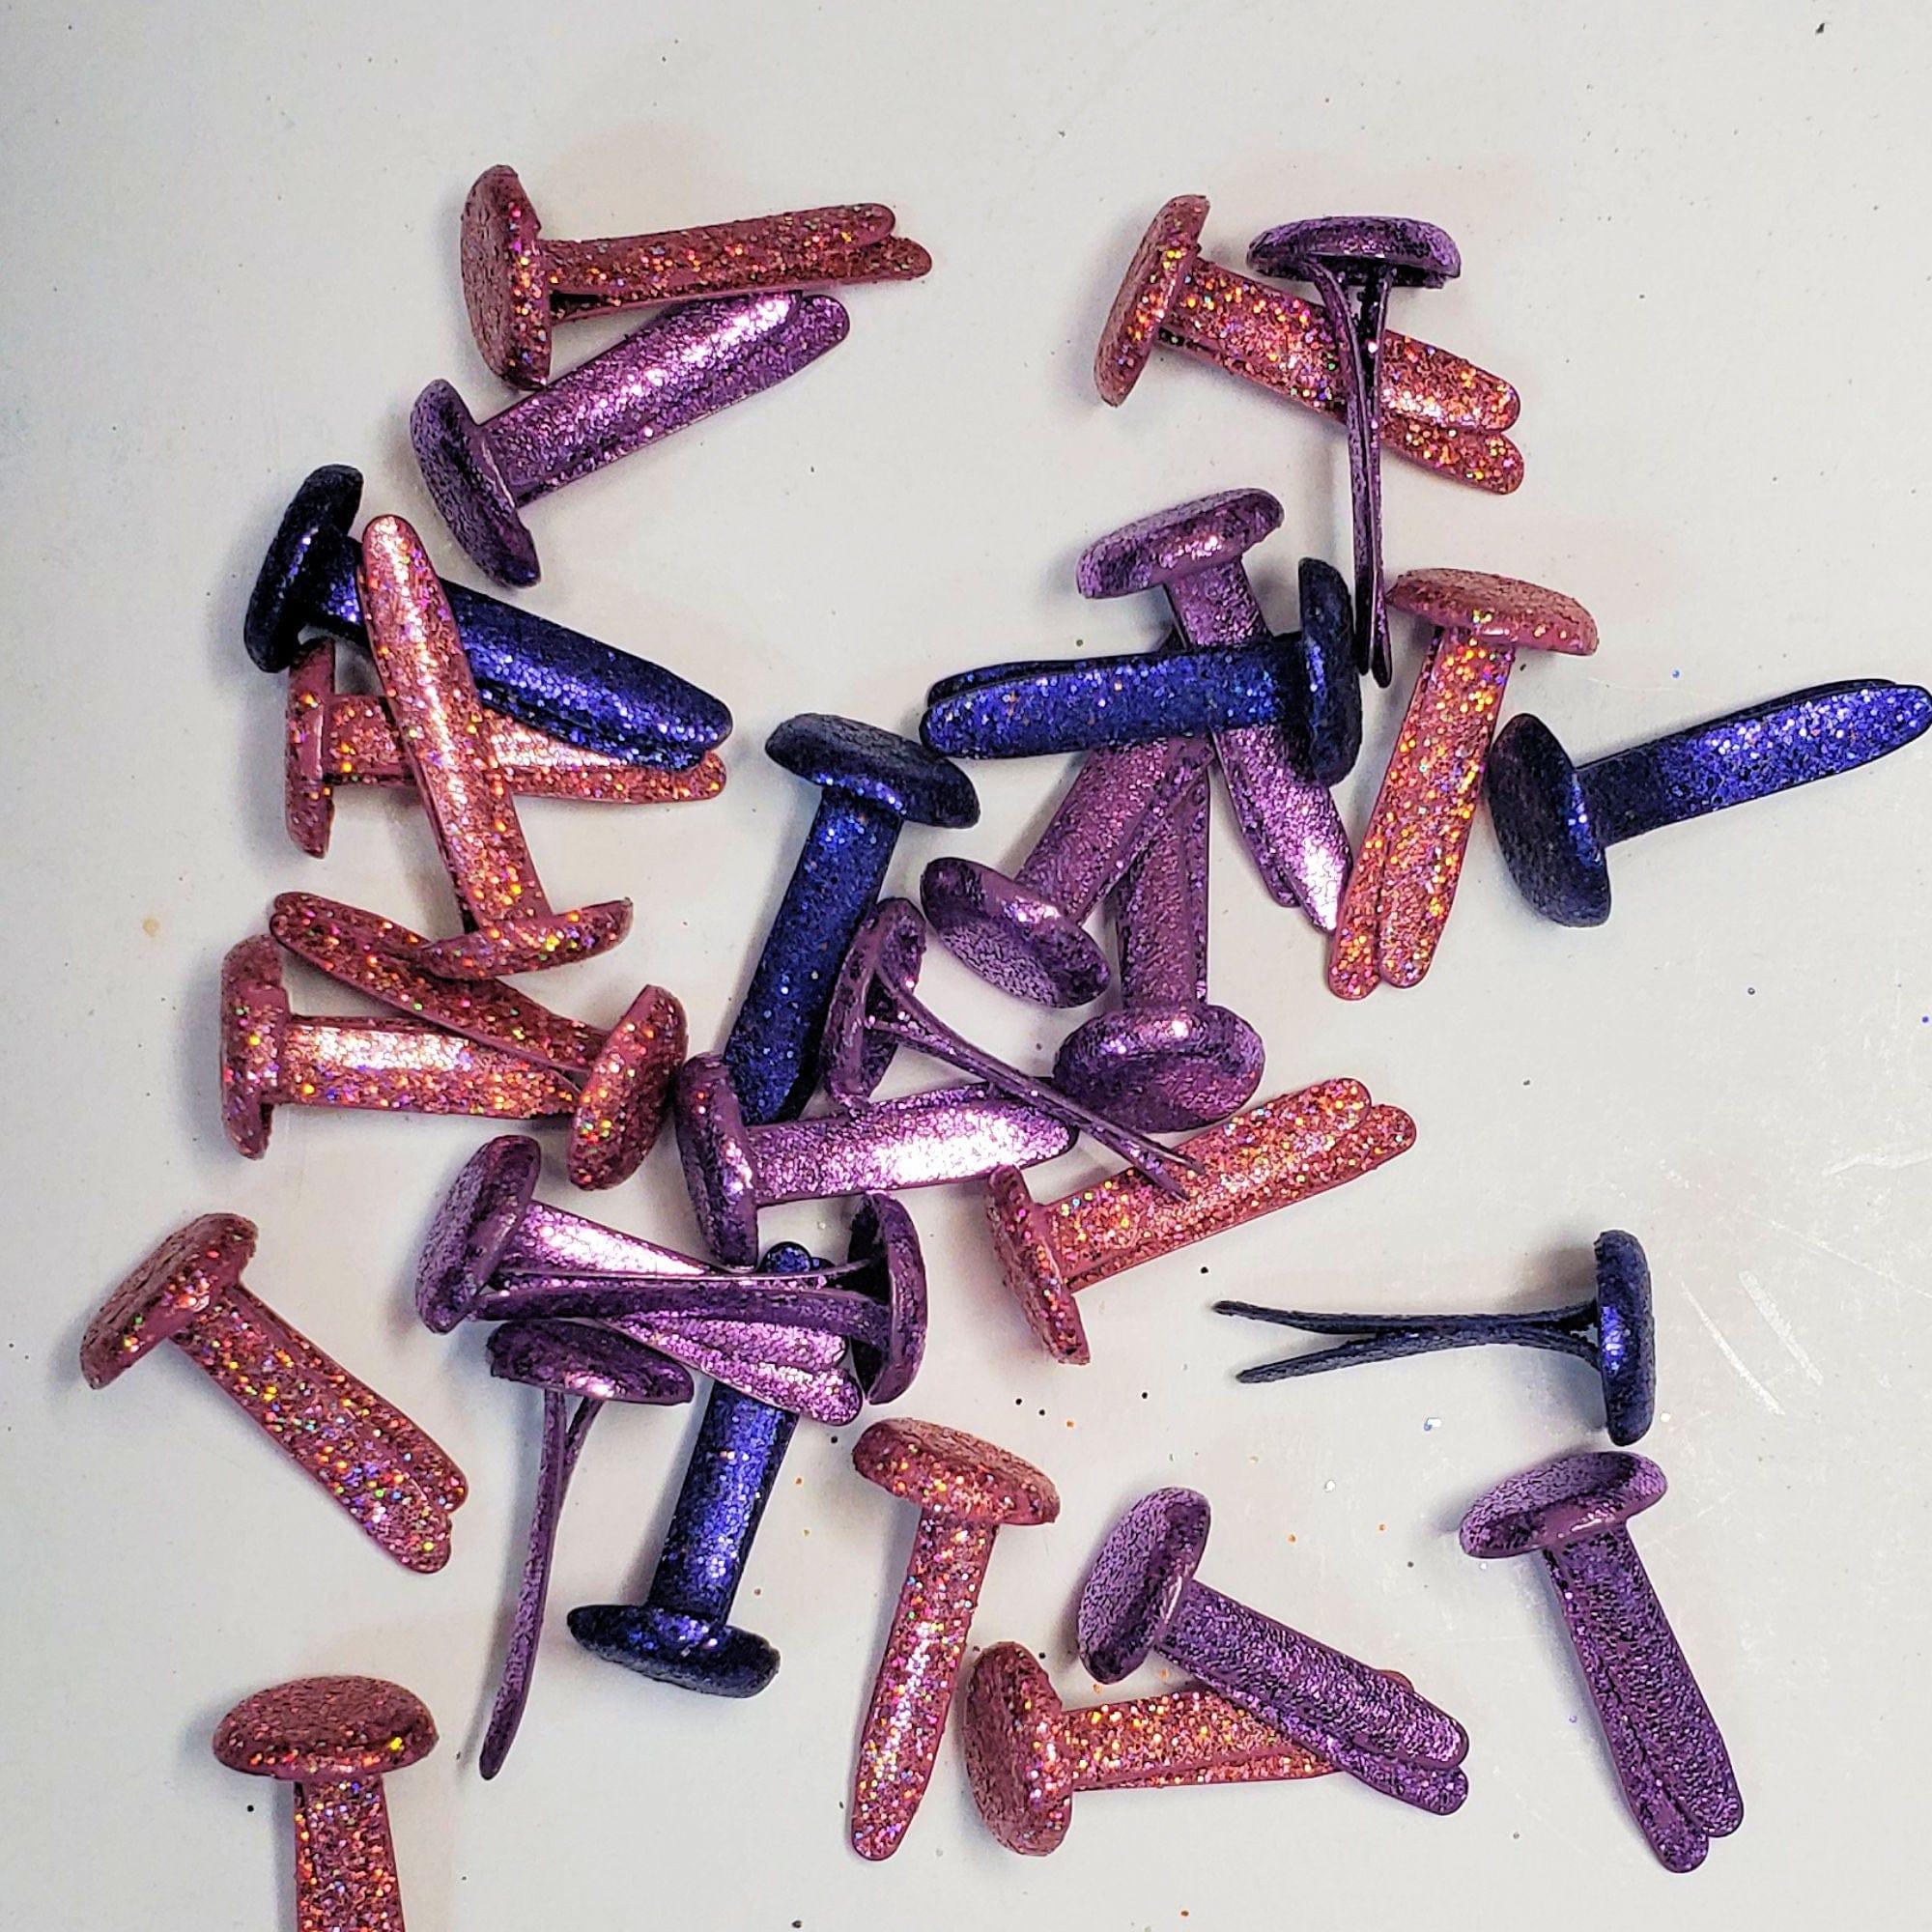 Hues of Pinks & Purples Medium Glitter Brads by SSC Designs - 30 Brads